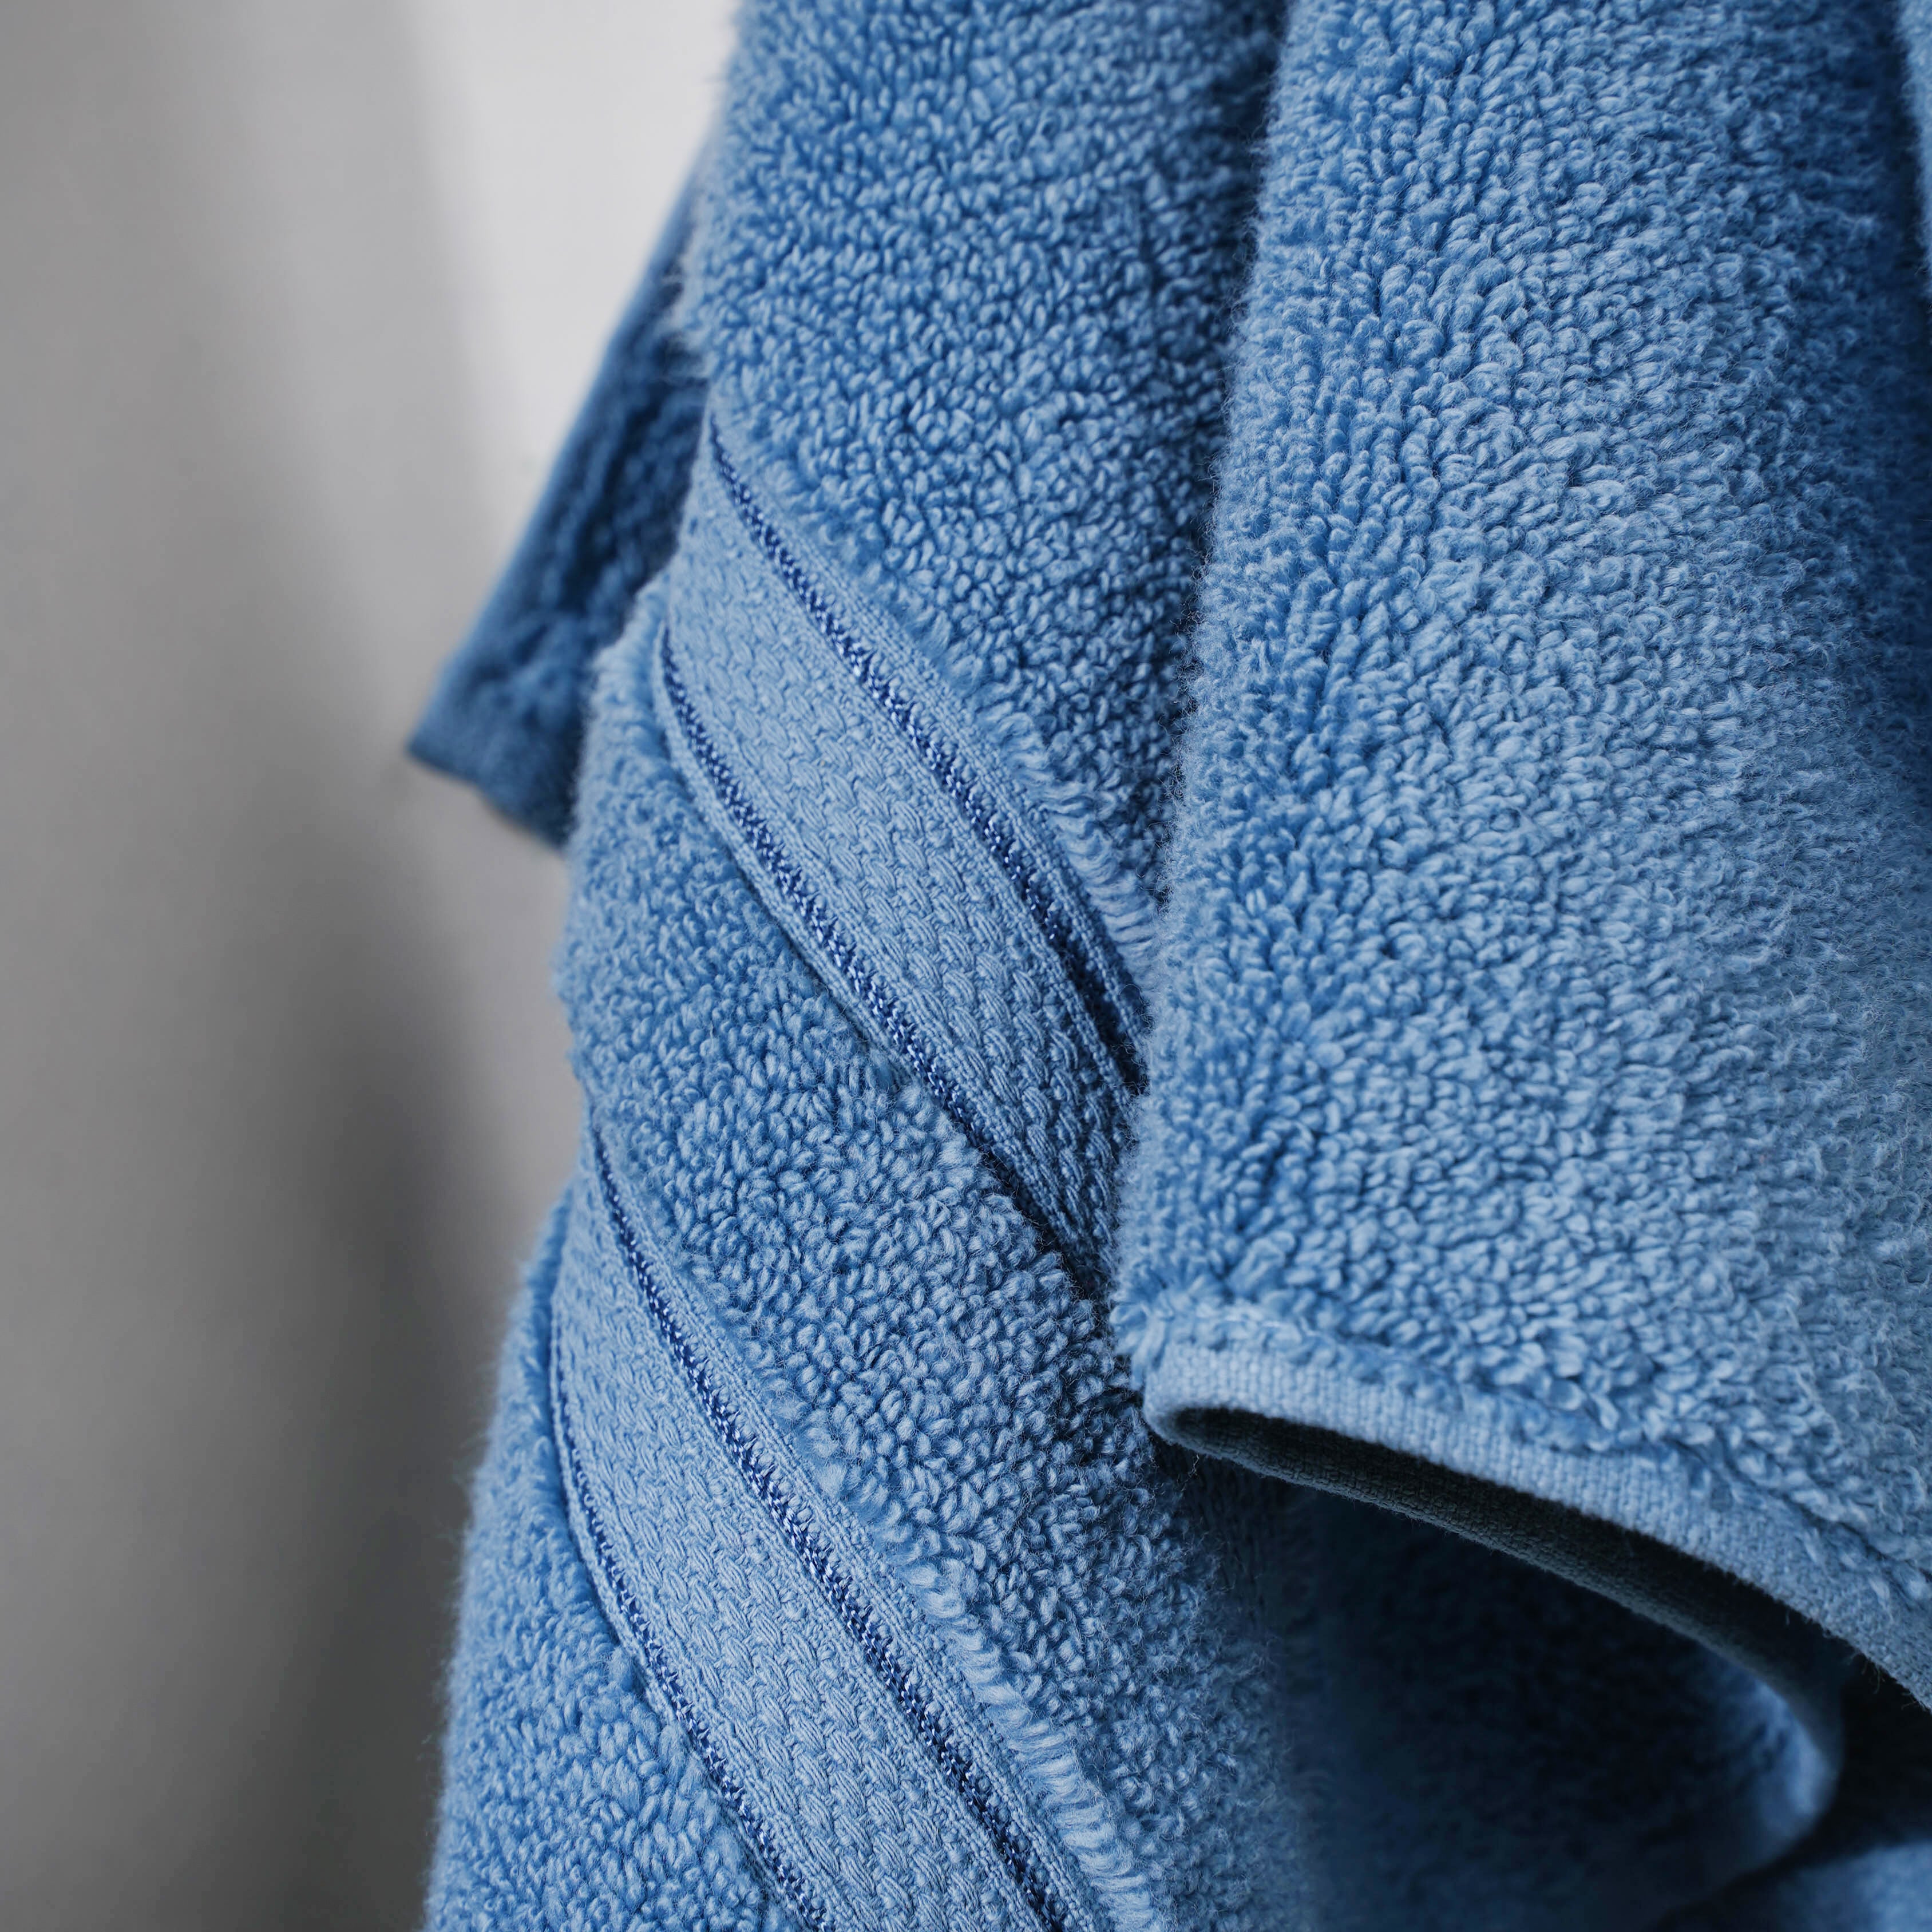 Plushy Bubbly Blue 100% Cotton Towel Set of 2 | Nestasia